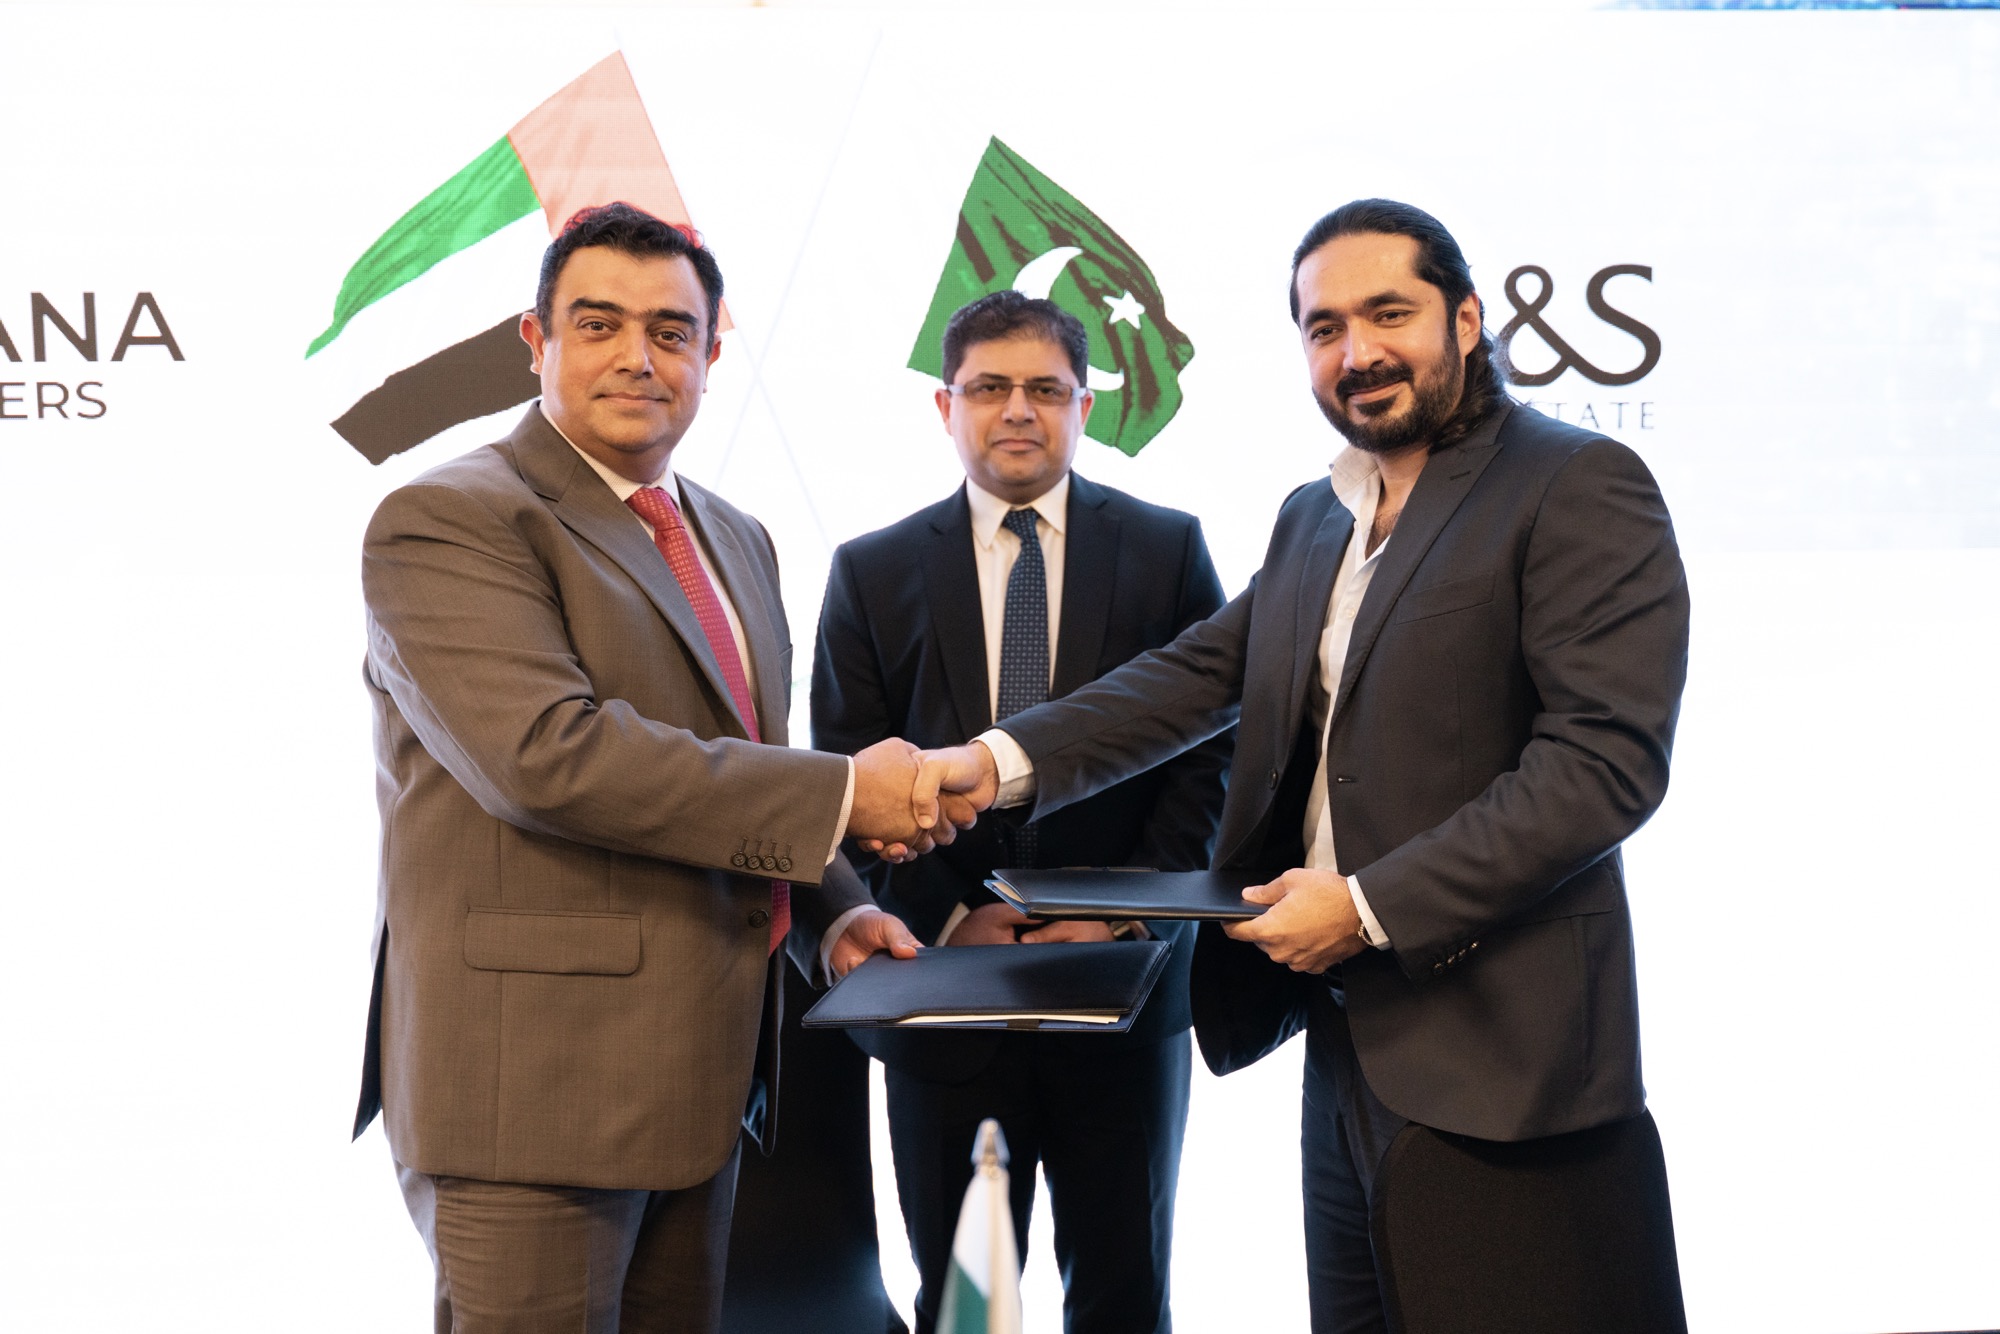 Dubai’s Top Realtors to Enter Pakistan, Form “Emirates Developers”